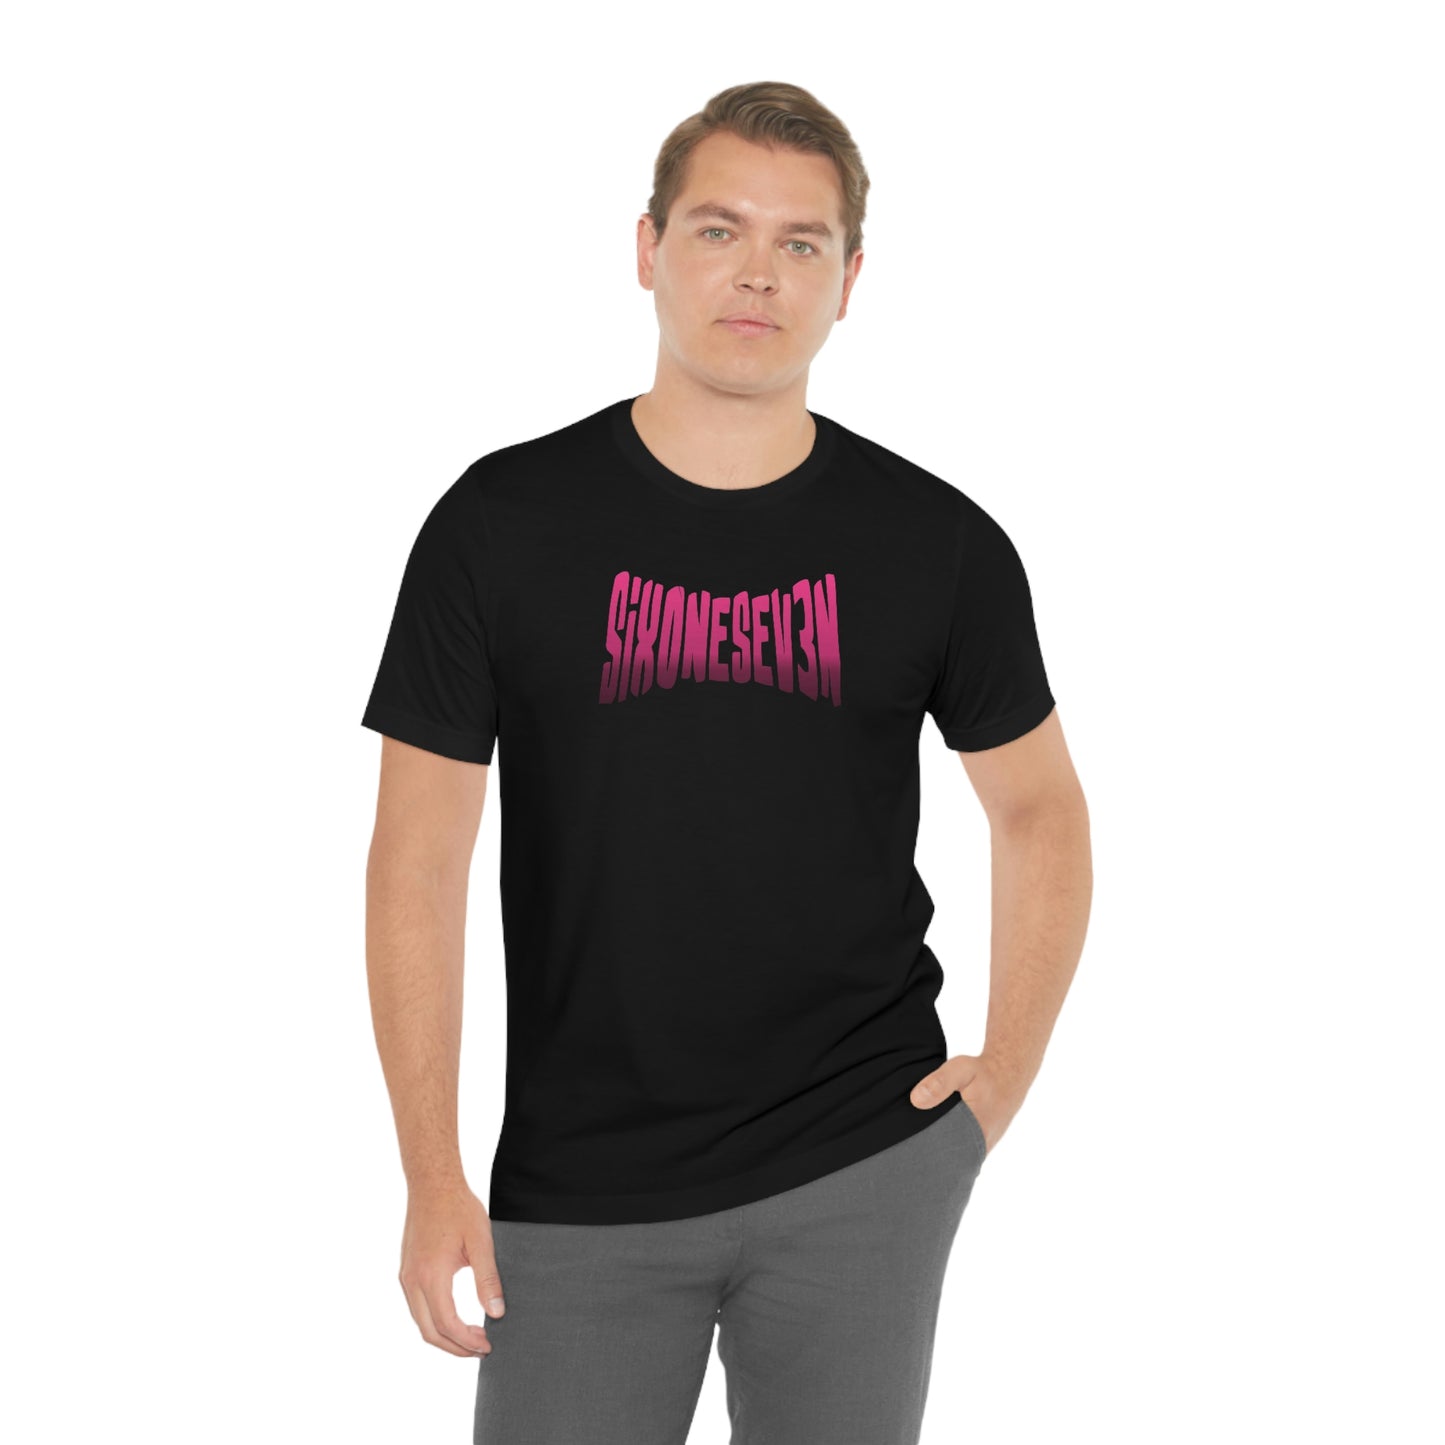 SixOneSev3n Text Unisex T-shirt